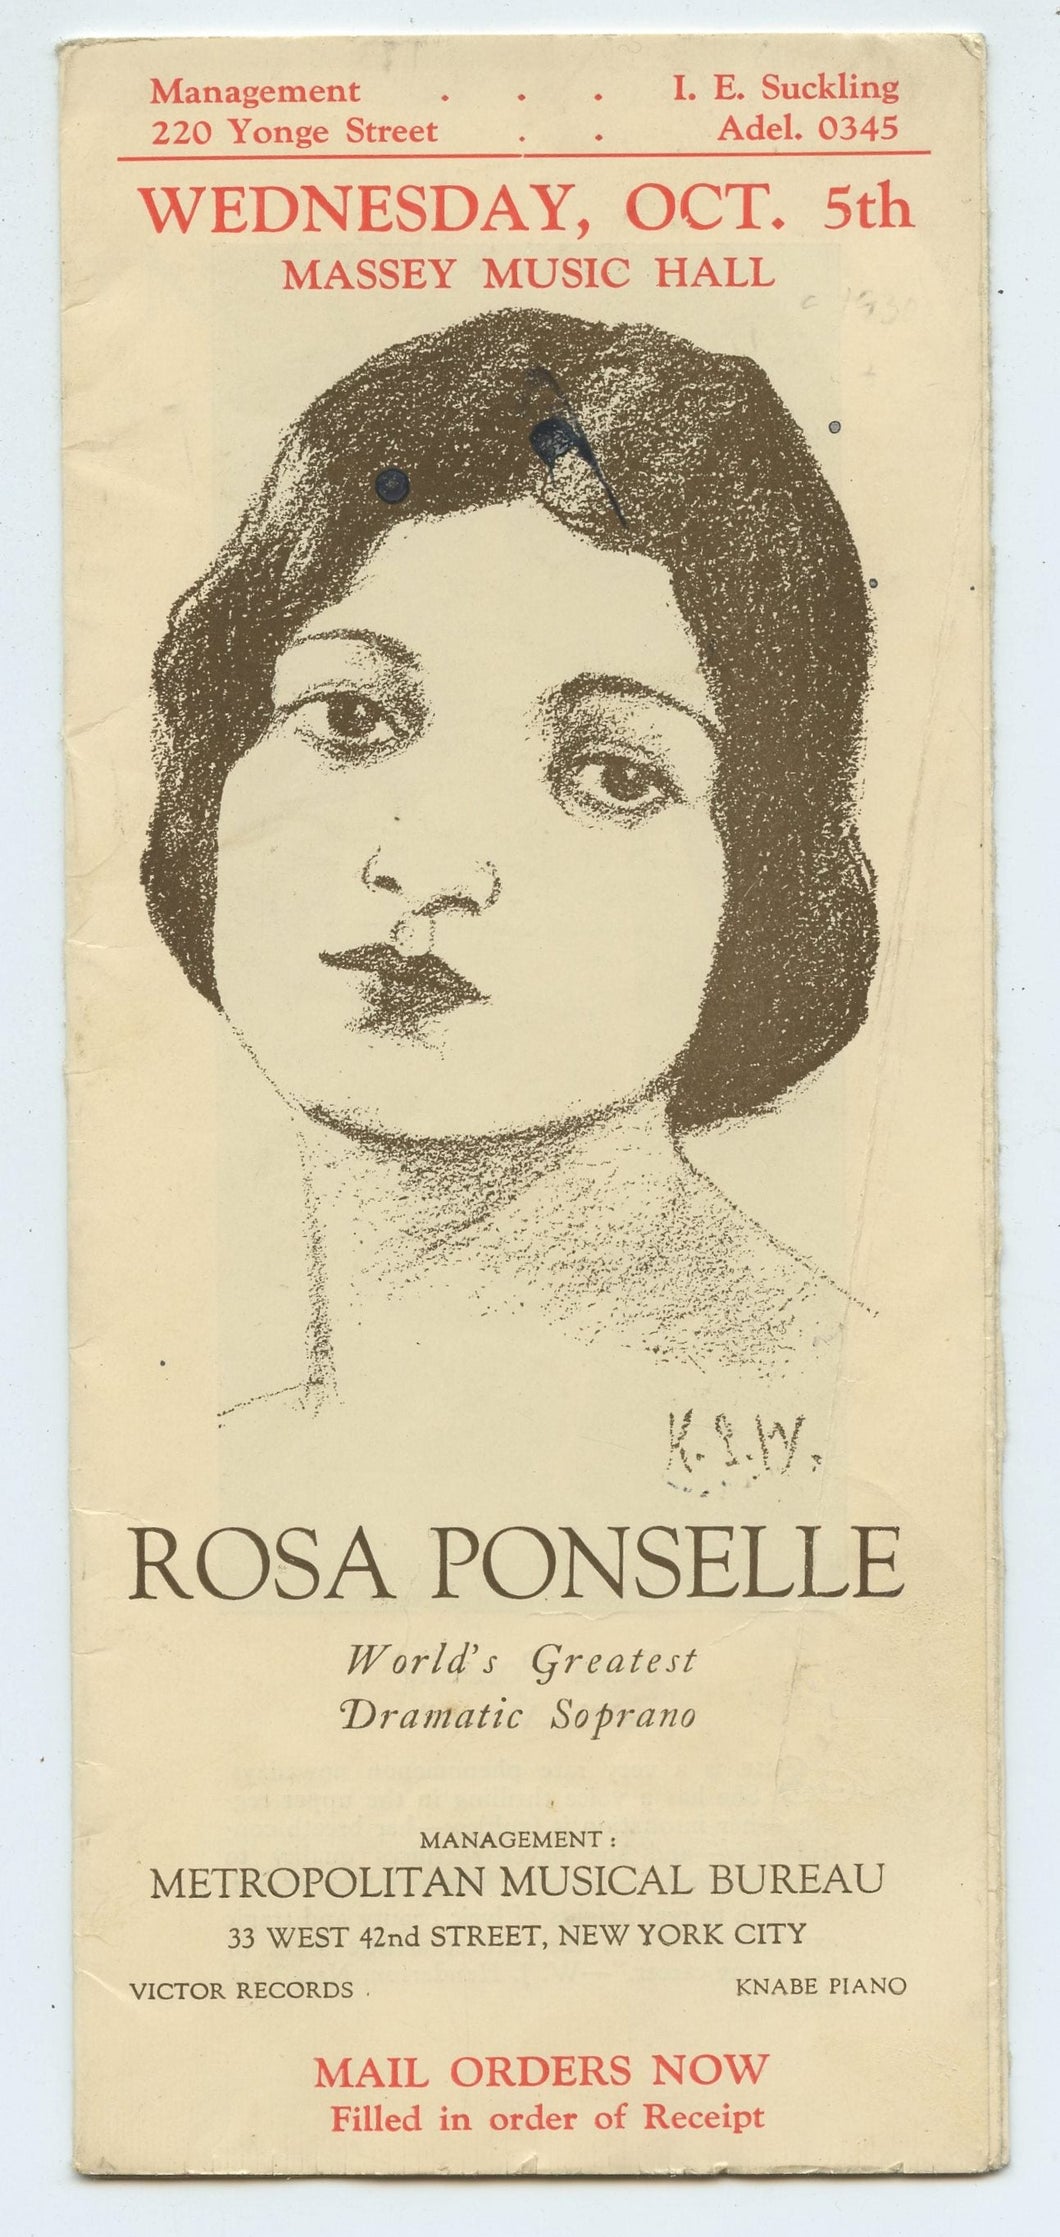 Rosa Ponselle advertising pamphlet